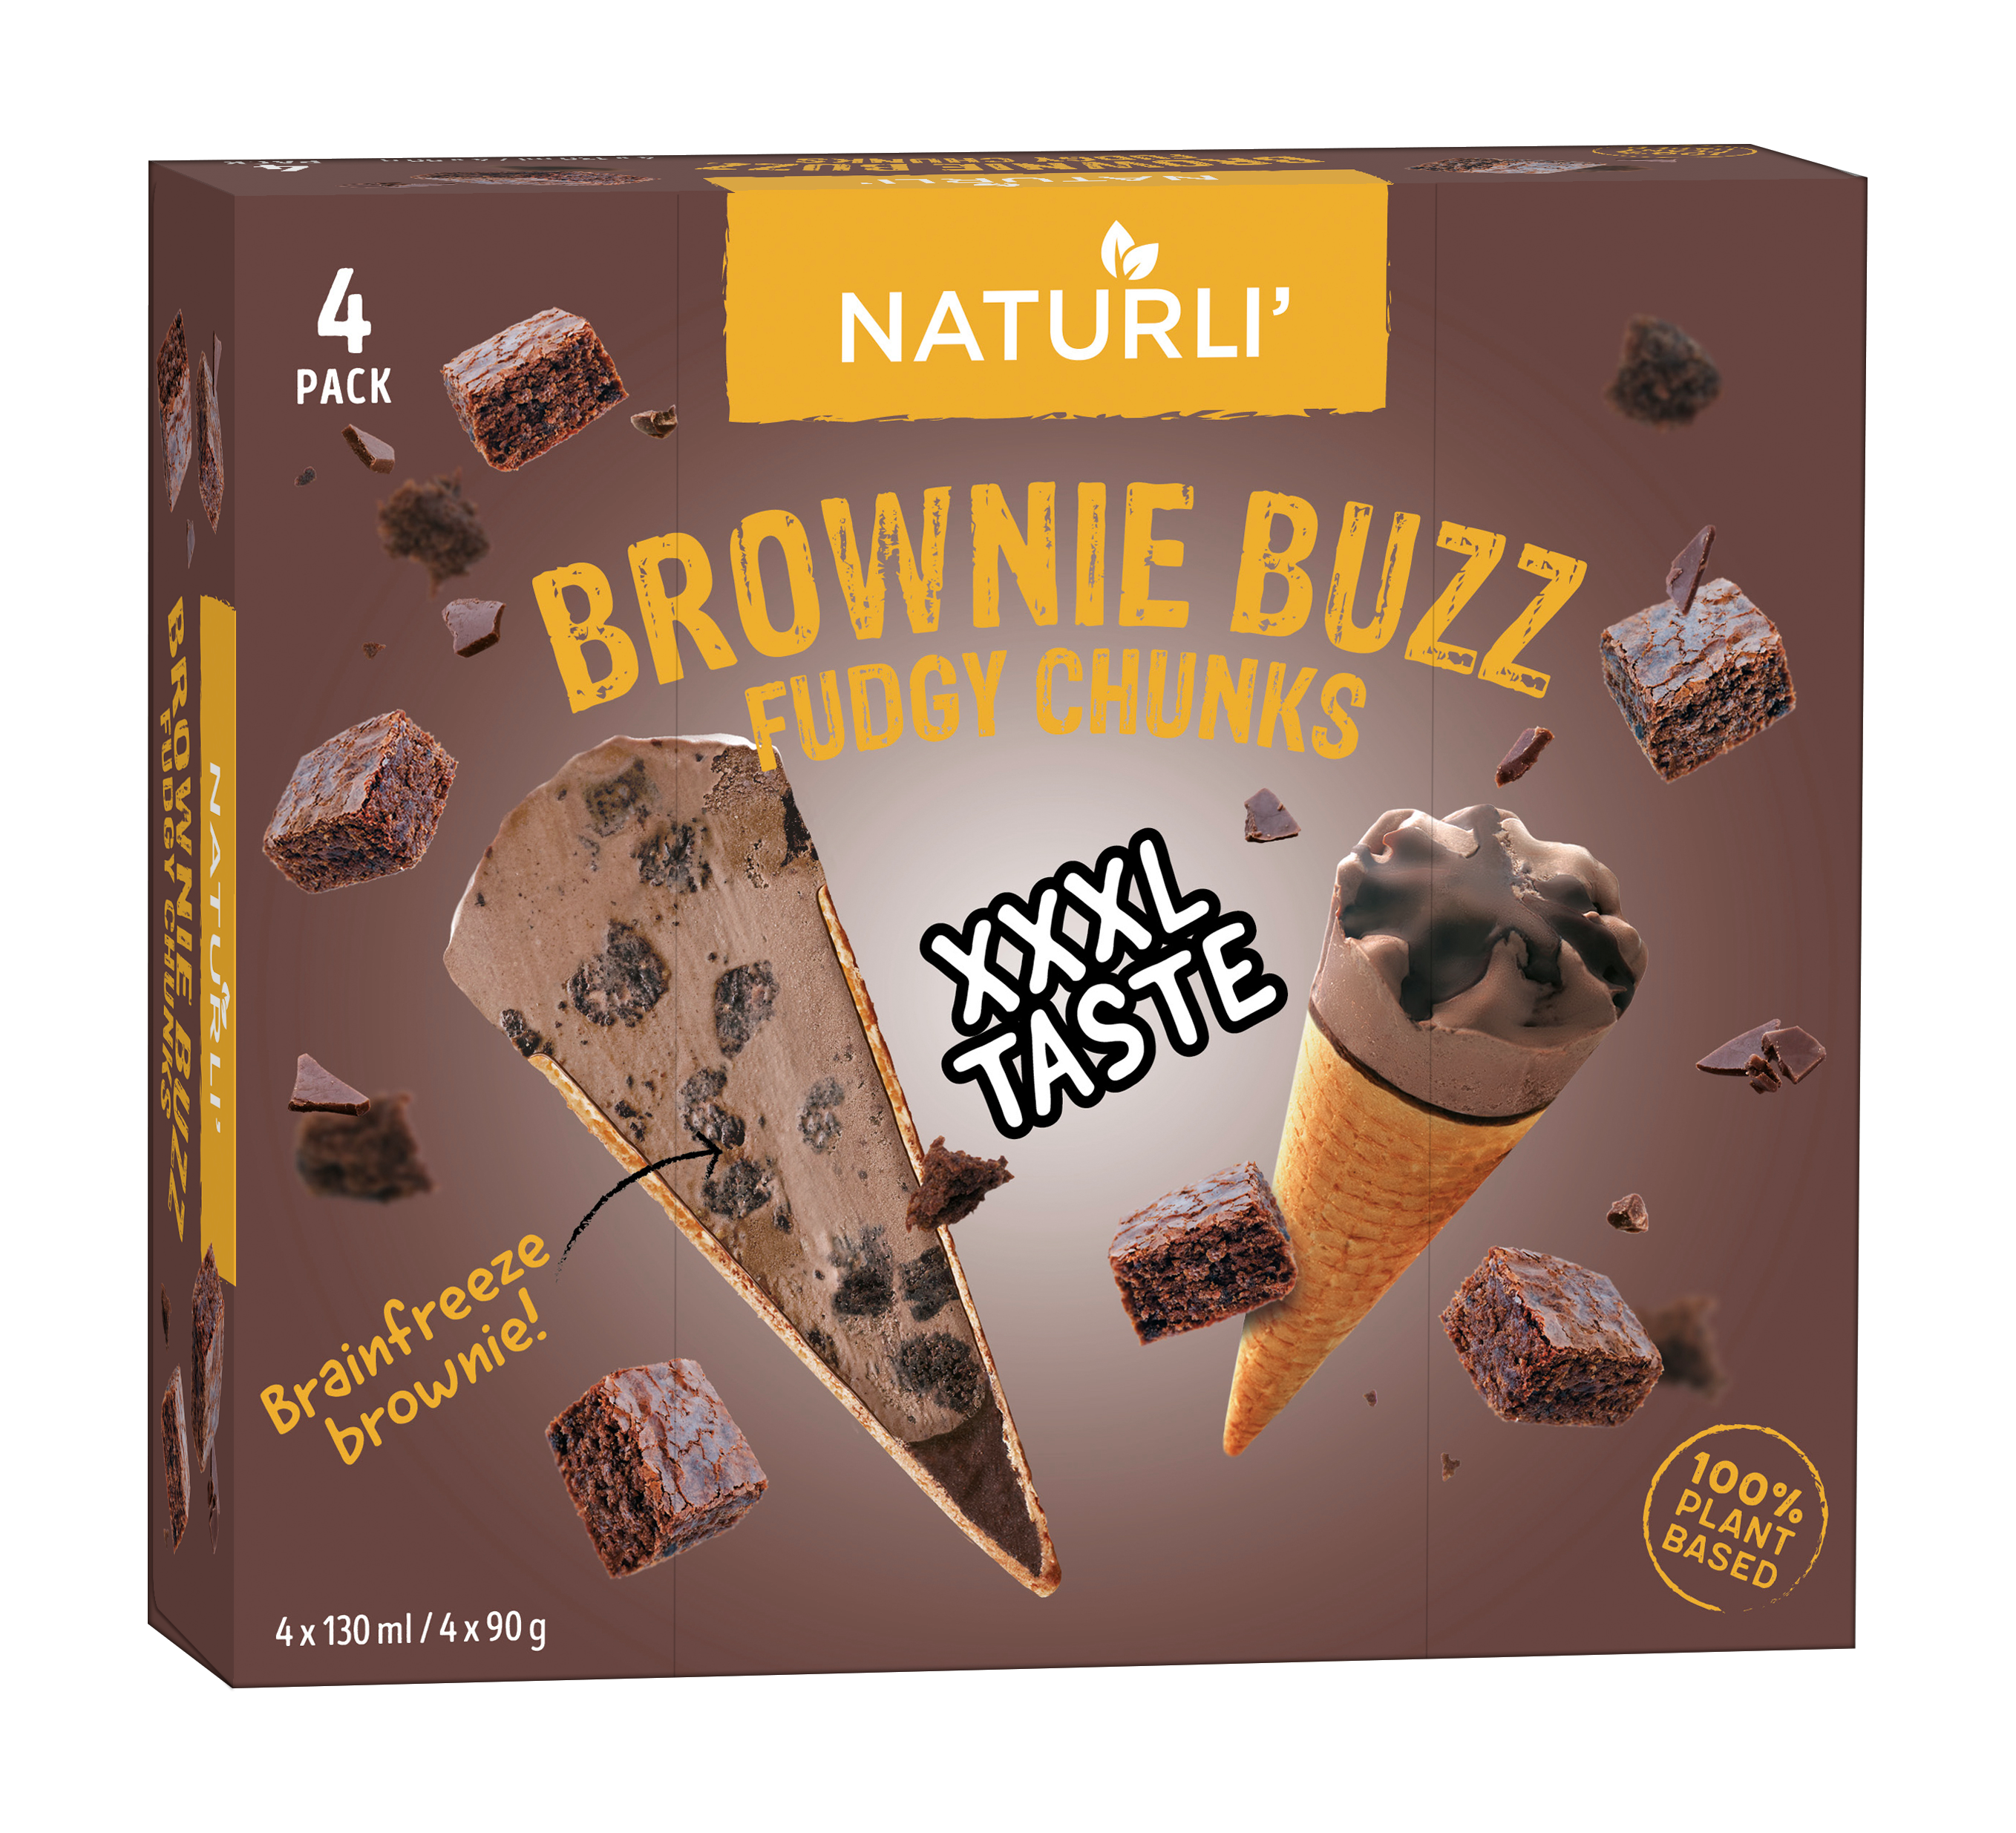 Brownie Buzz Is